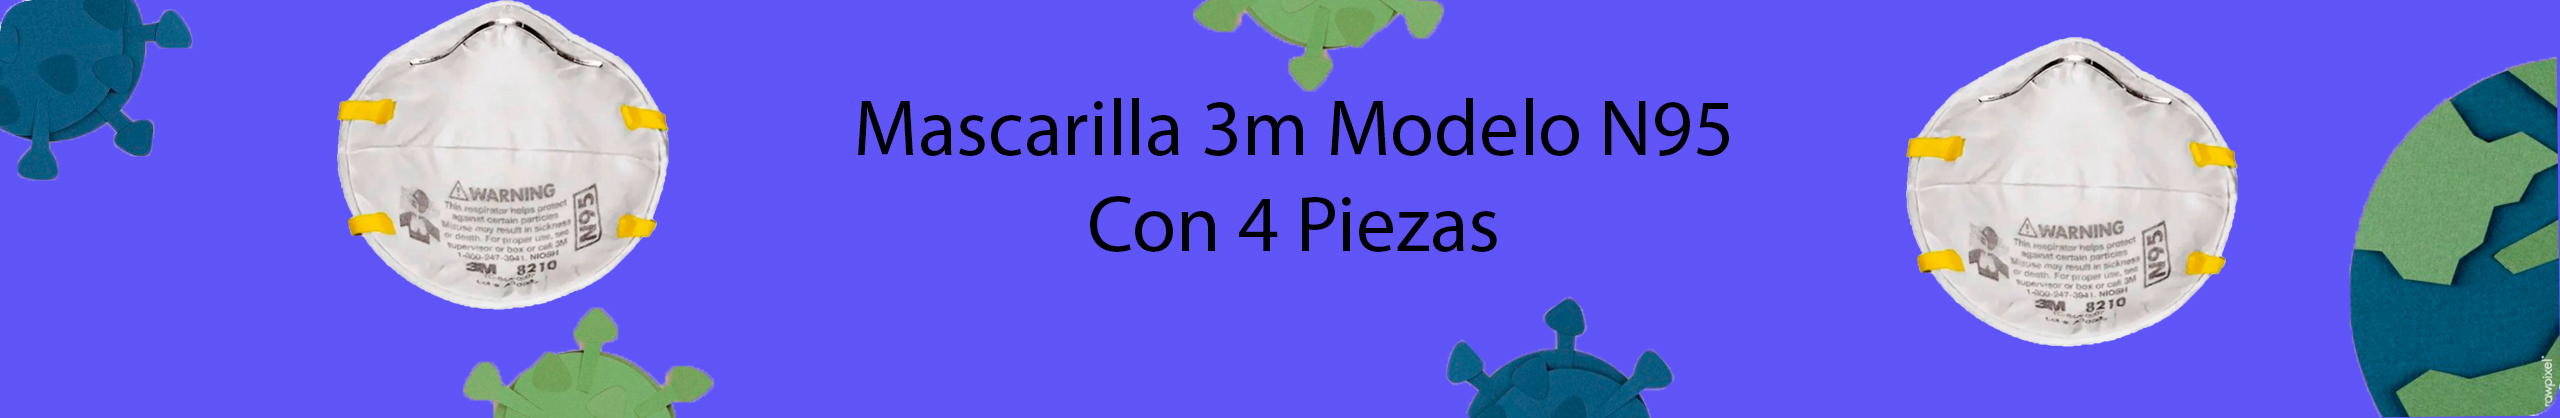 mascarilla-3m-modelo-n95-caja-con-20-piezas